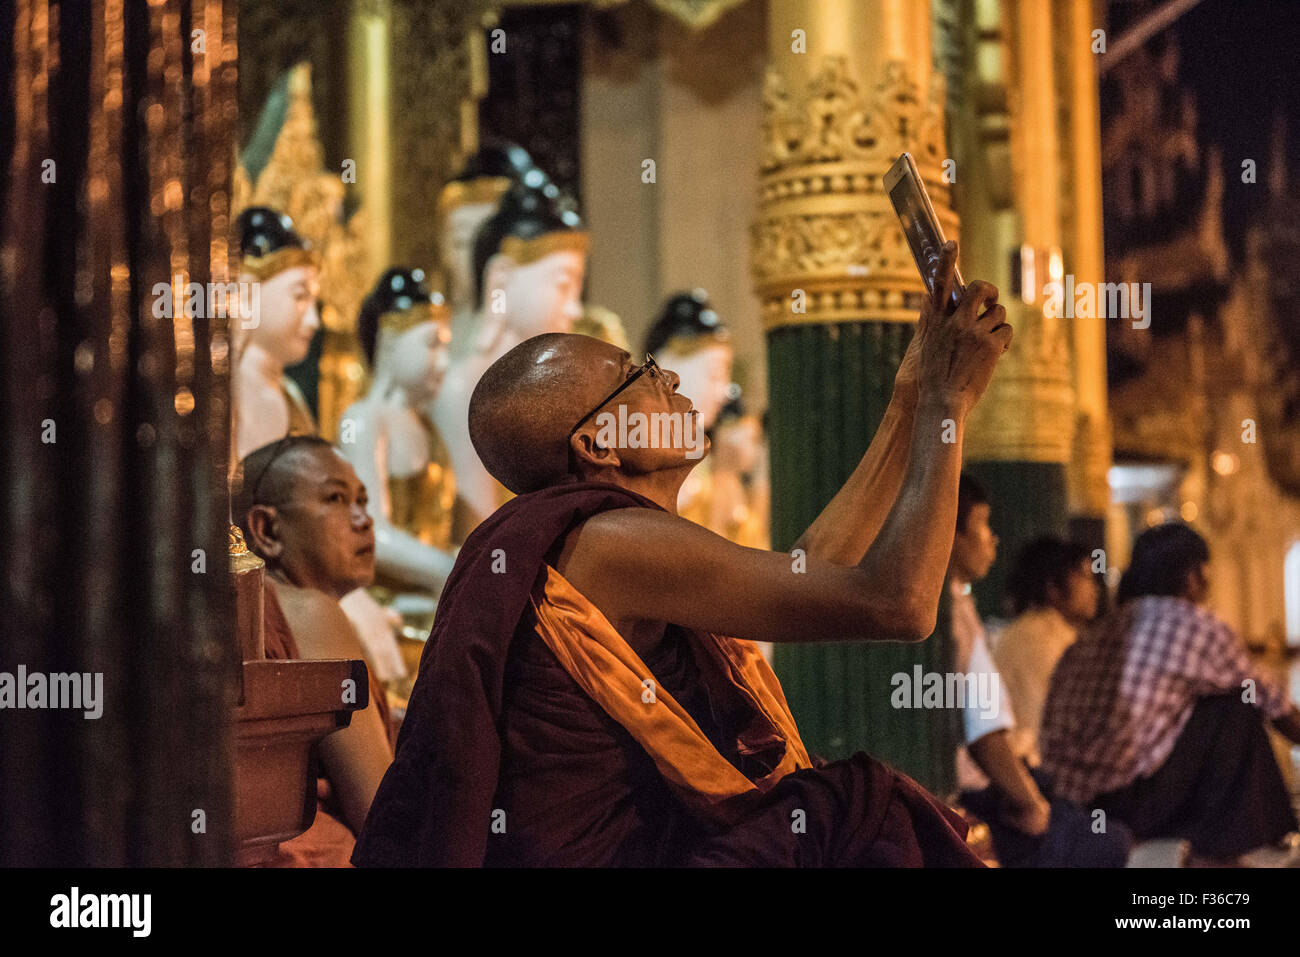 La pagode Shwedagon, Yangon, Myanmar Banque D'Images